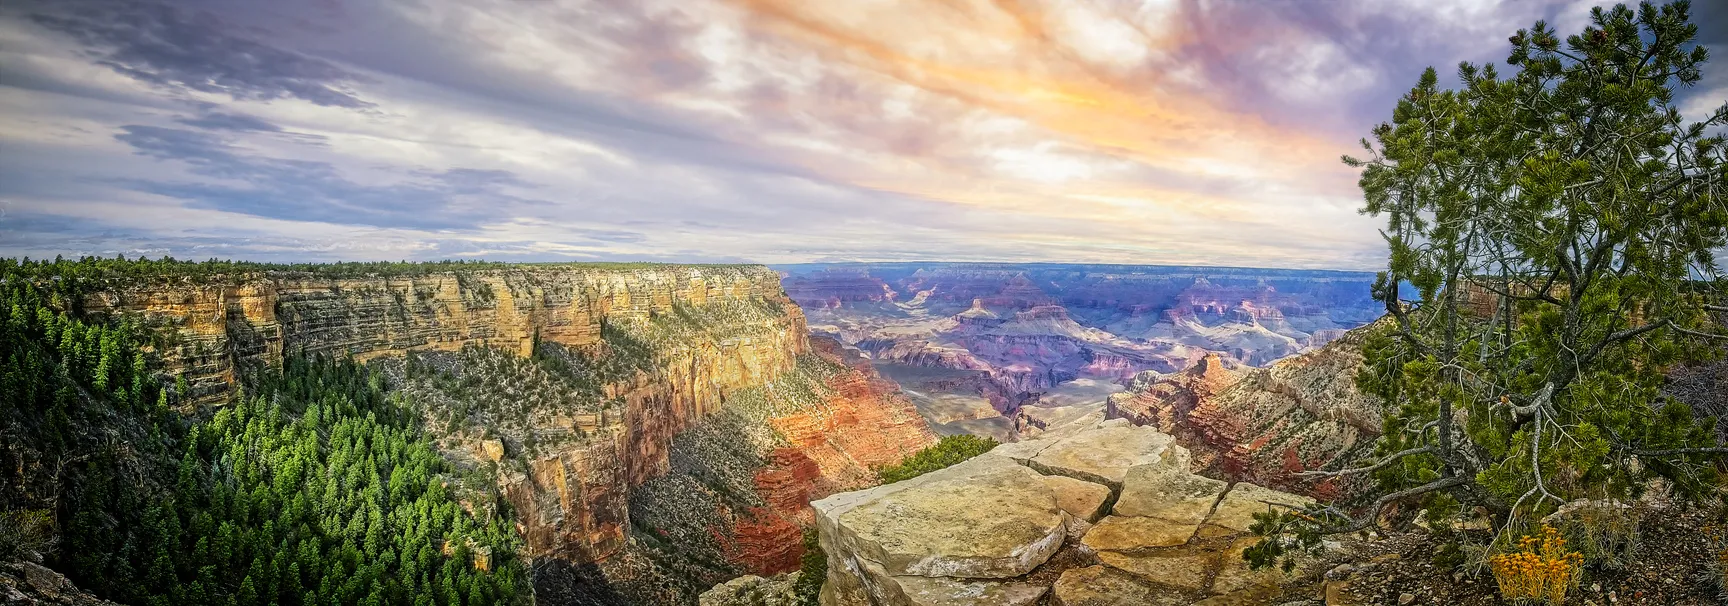 Le Grand Canyon dans l'État de l'Arizona © iStock / tracielouise